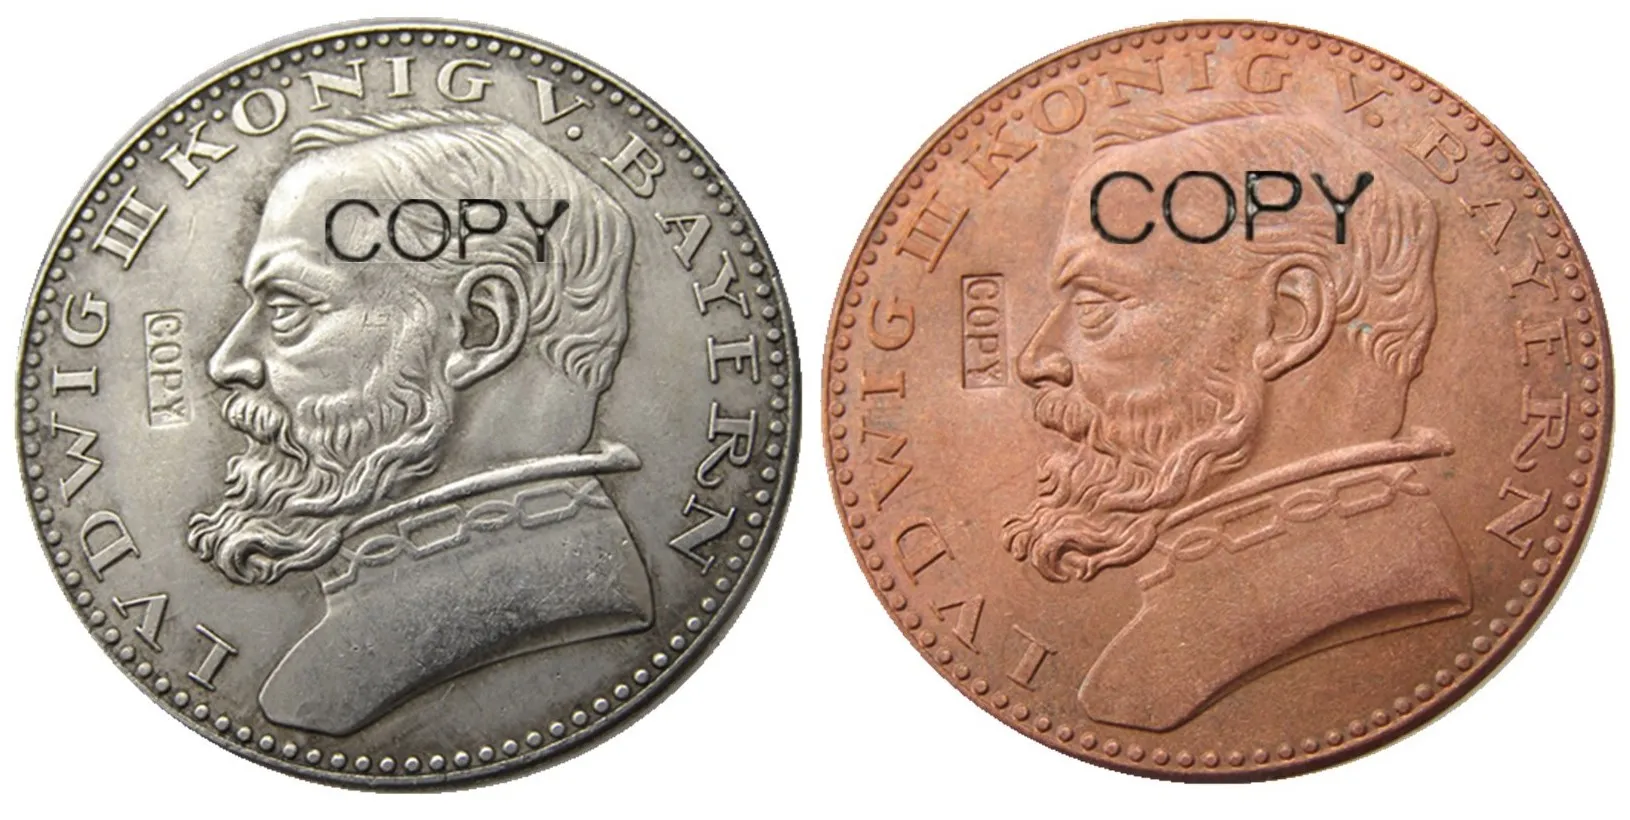 НЕМЕЦКАЯ монета-копия 1913 CU Pattern 5 Mark German ST Bavaria Ludwig III из 100% меди/ серебра с покрытием - 3